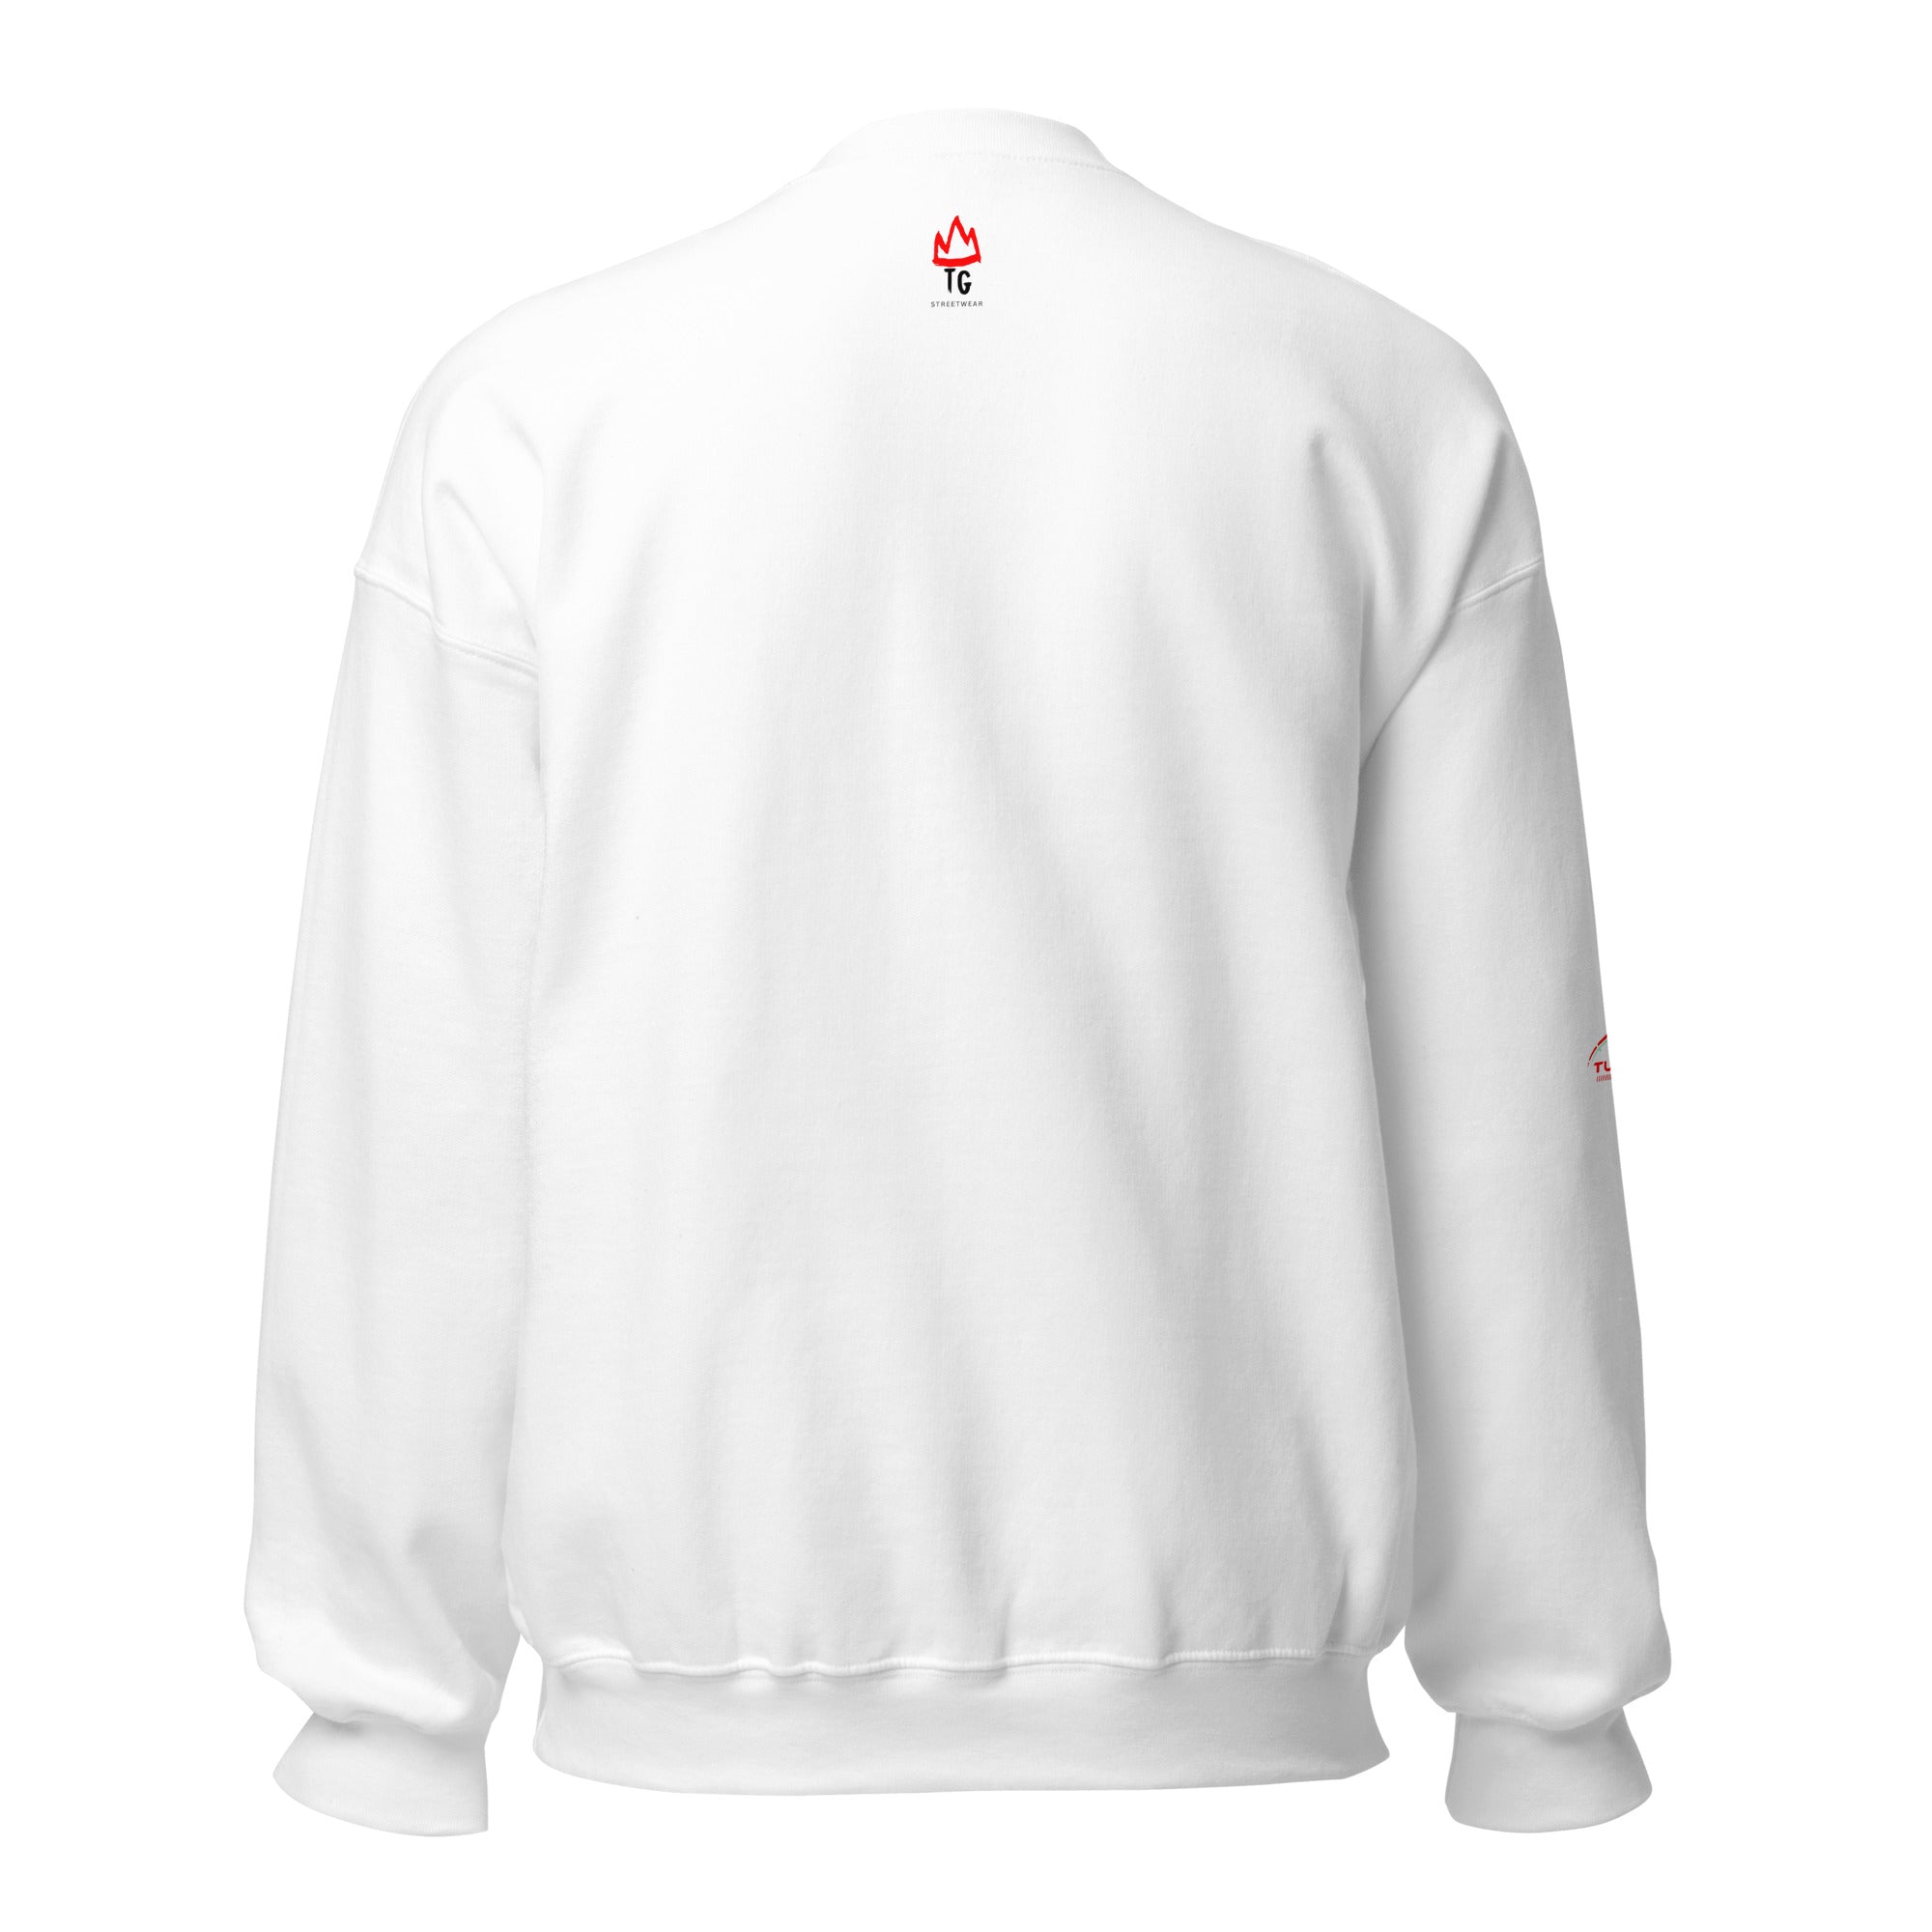 TunerGenix TG White Unisex Sweatshirt